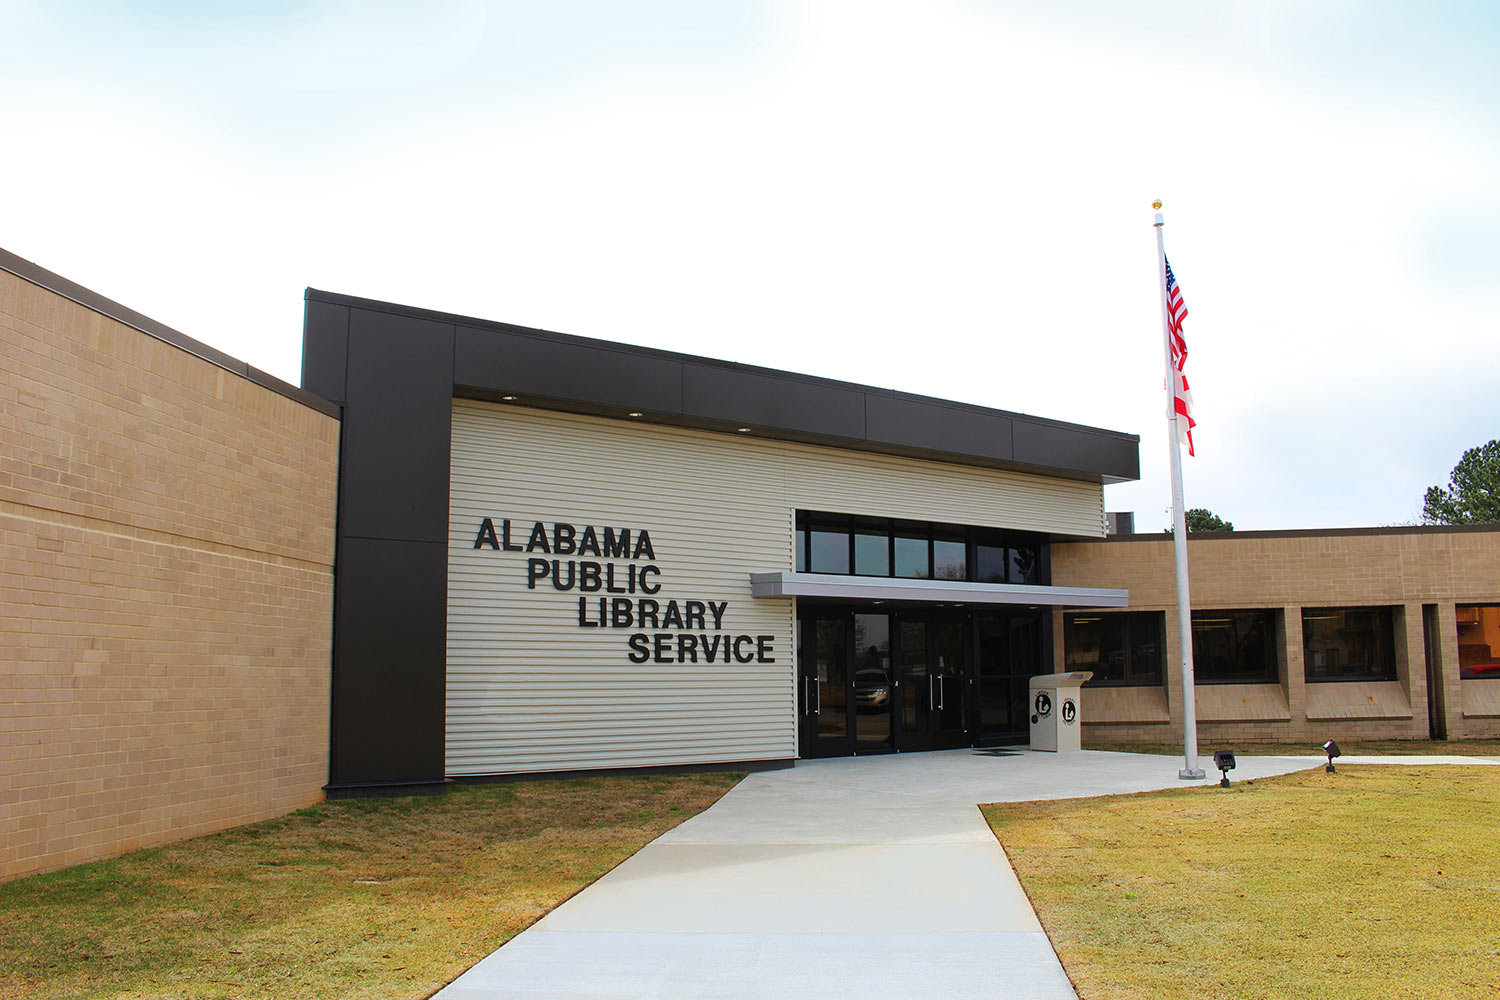 Alabama Public Library Service Building photo 1